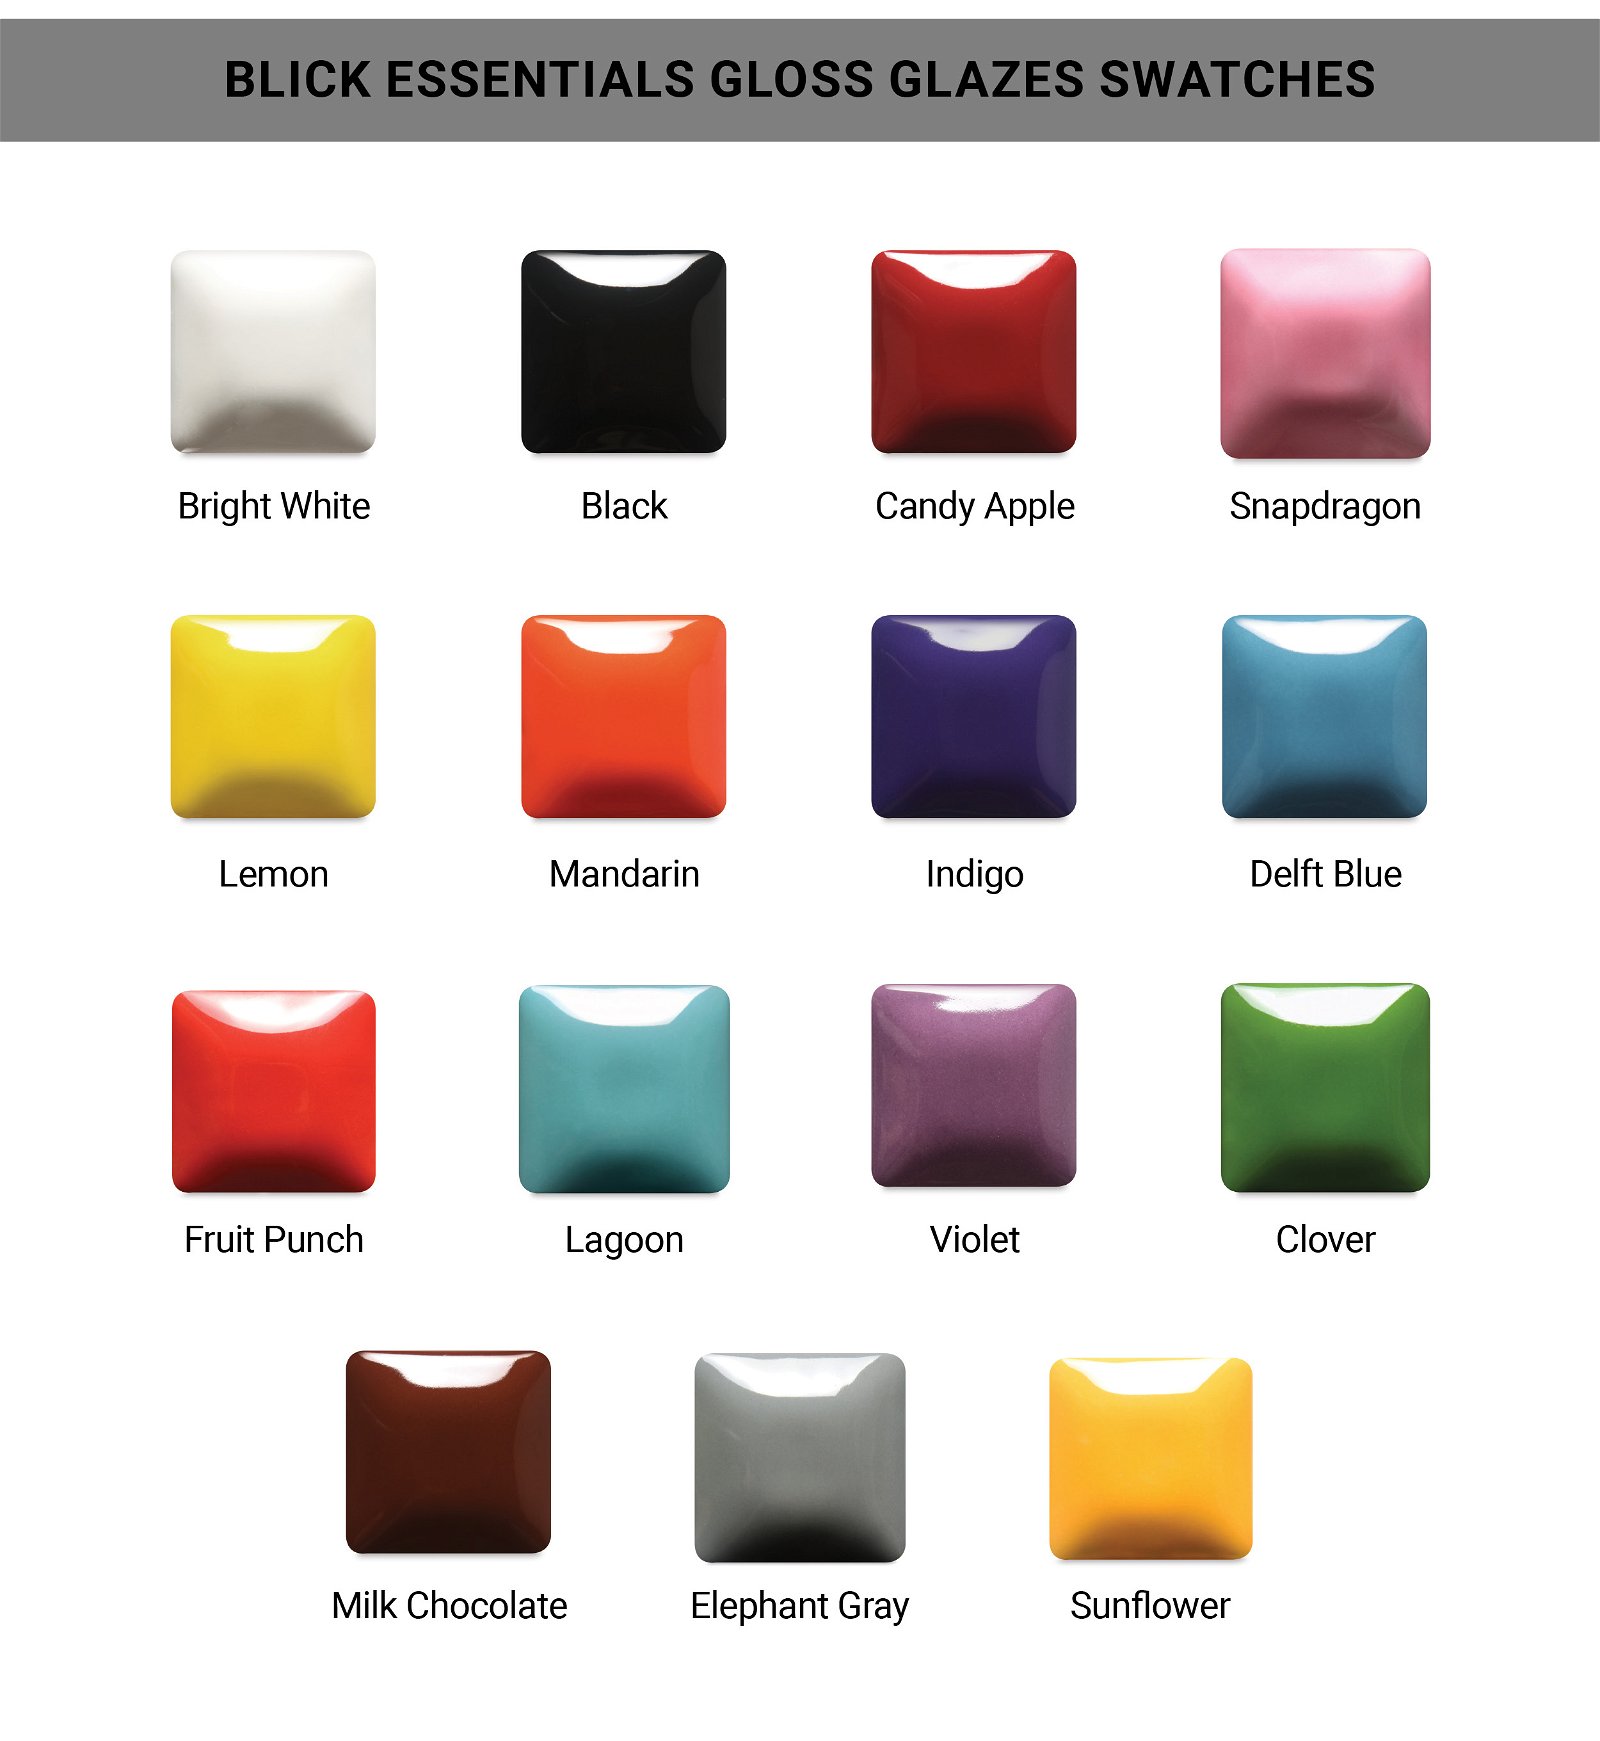 Blick Essentials Gloss Glazes Swatches